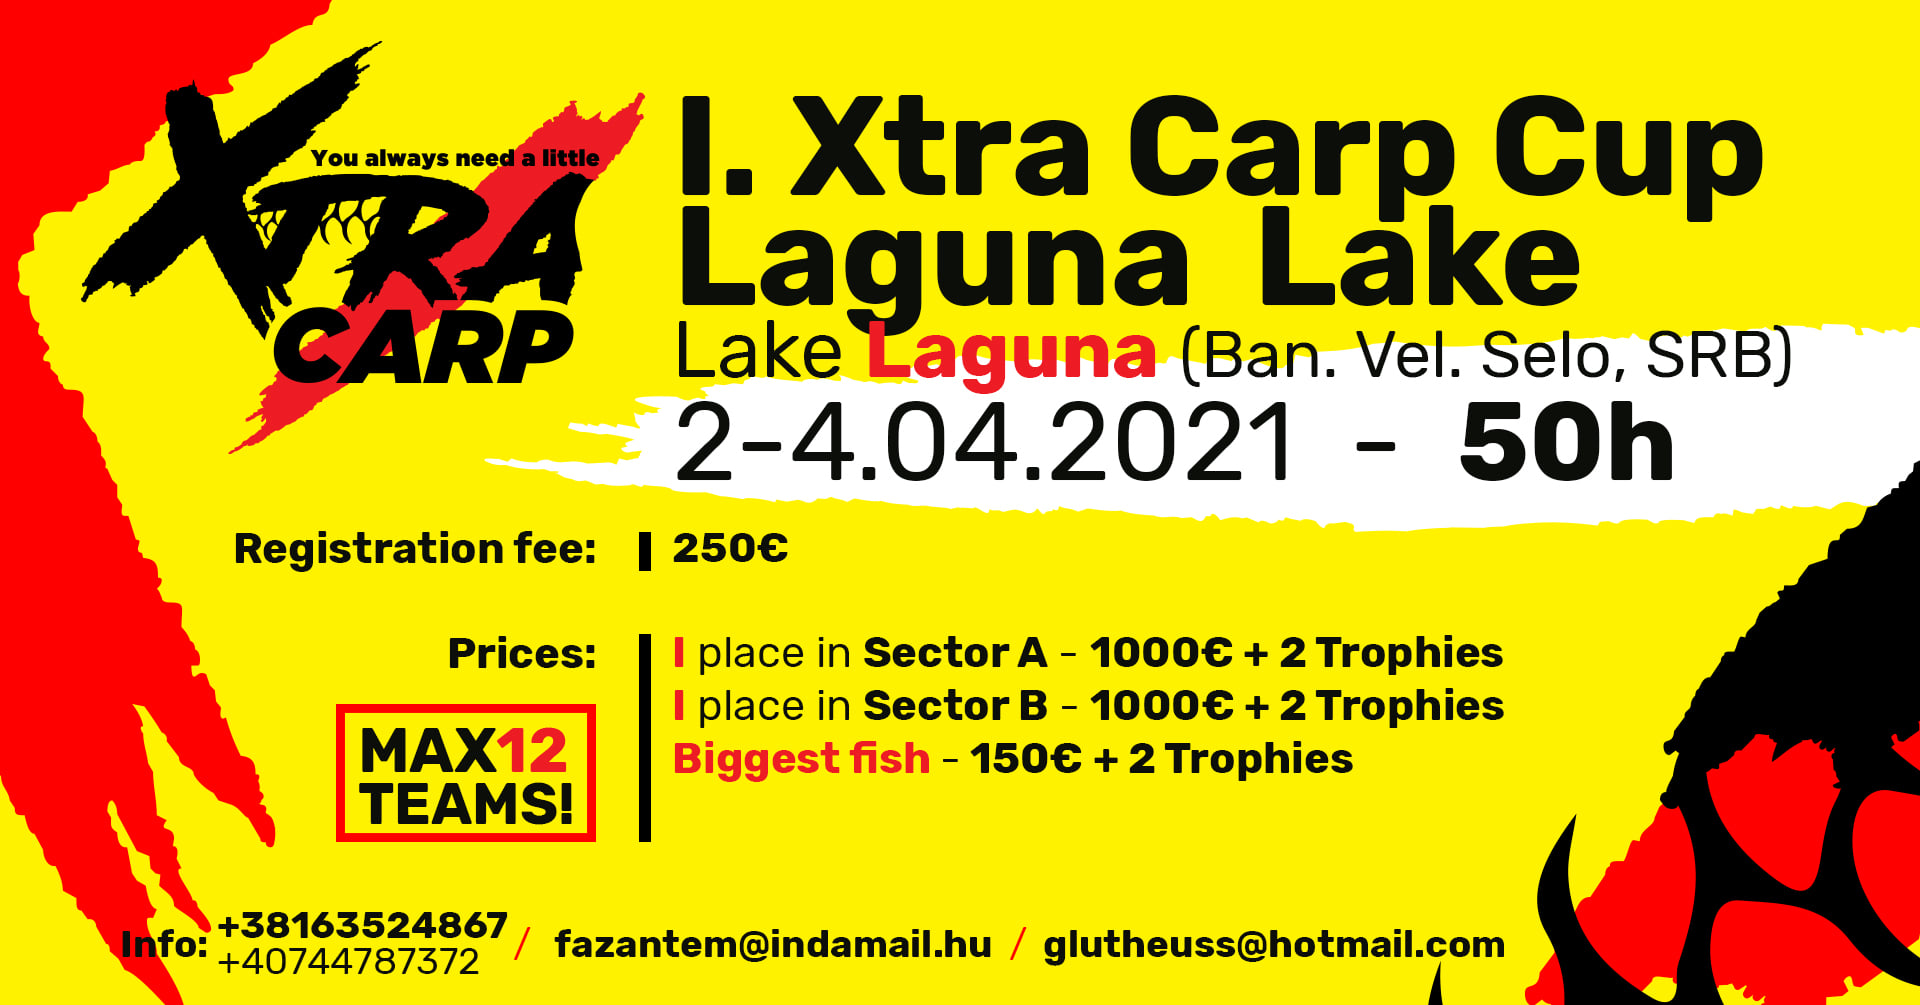 I-xtra-carp-cup-laguna-lake